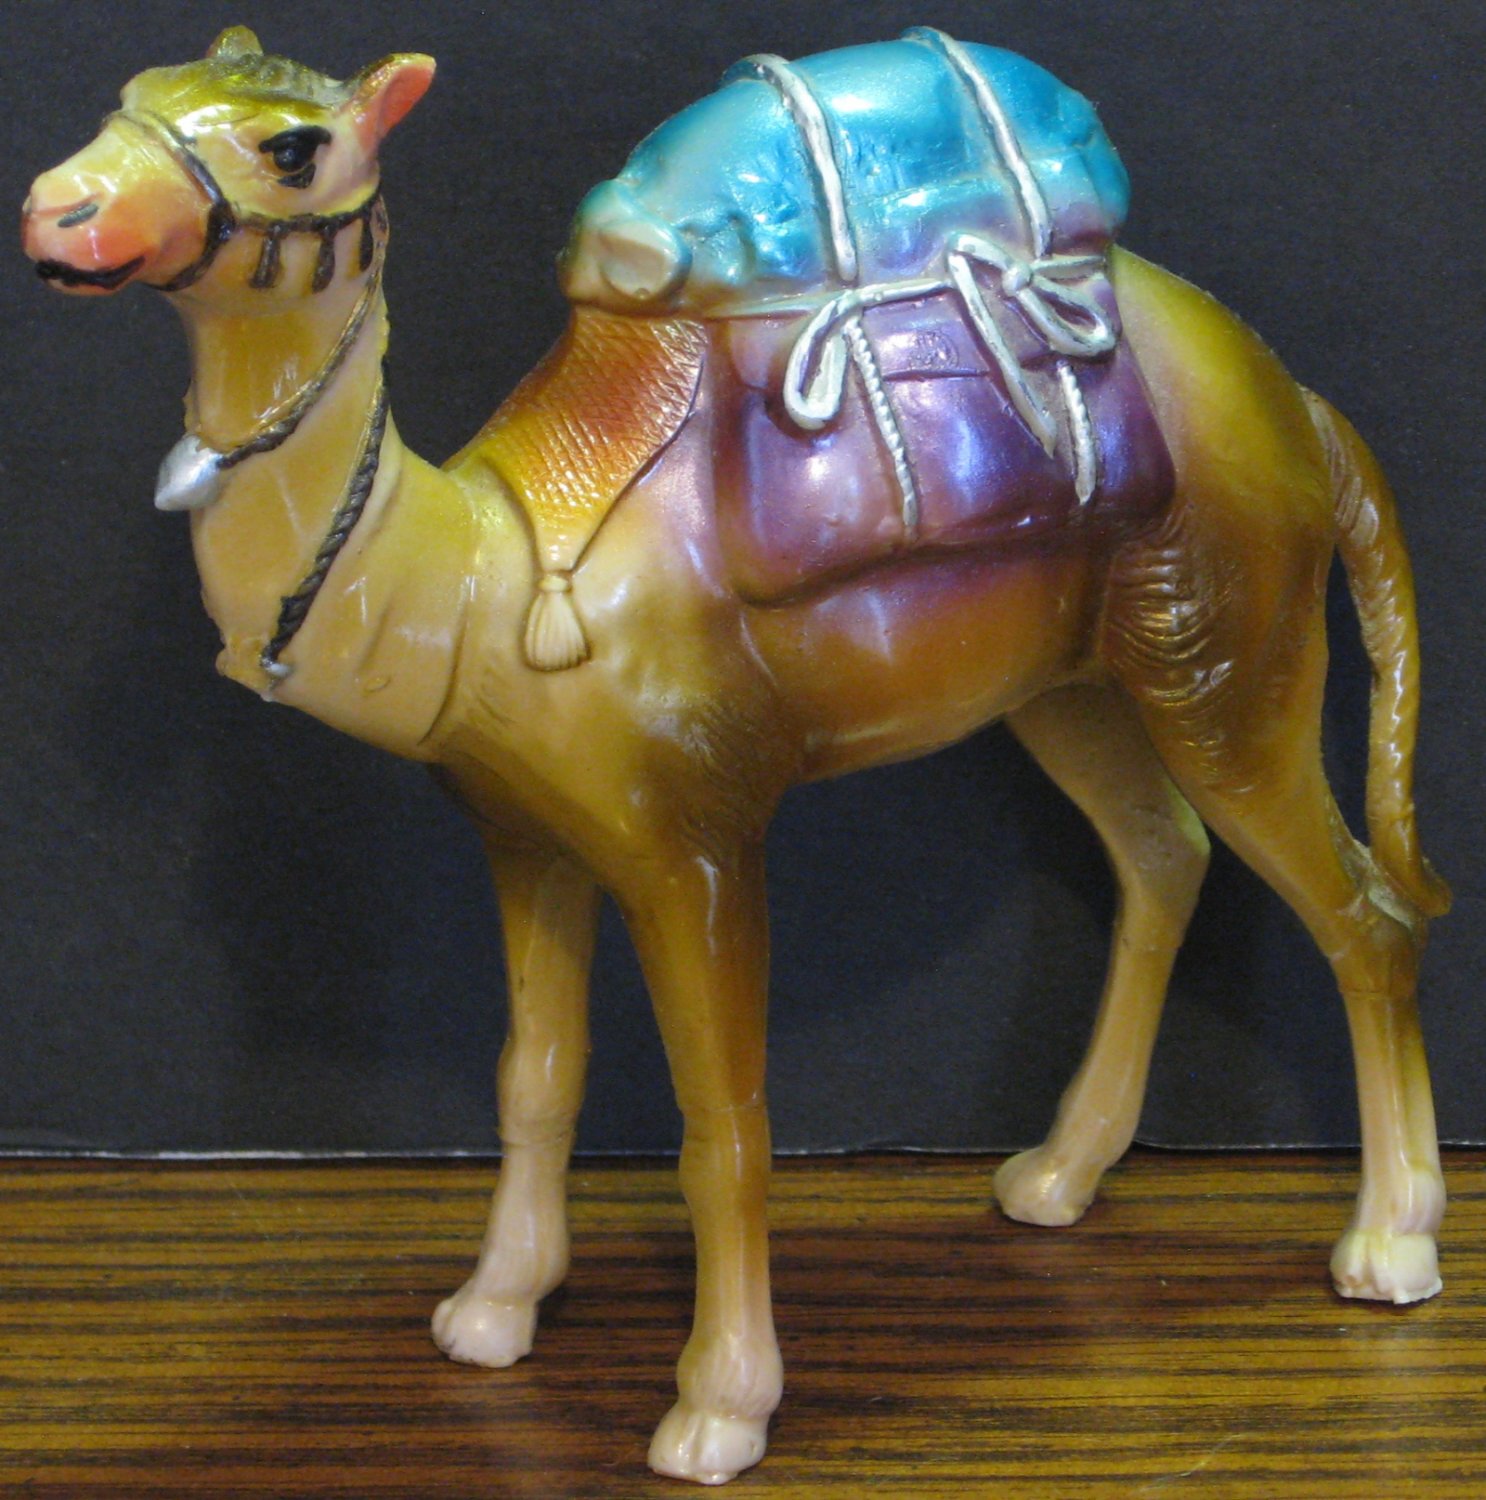 Resin Camel Christmas Nativity 5" Figurine - 1990s Vintage